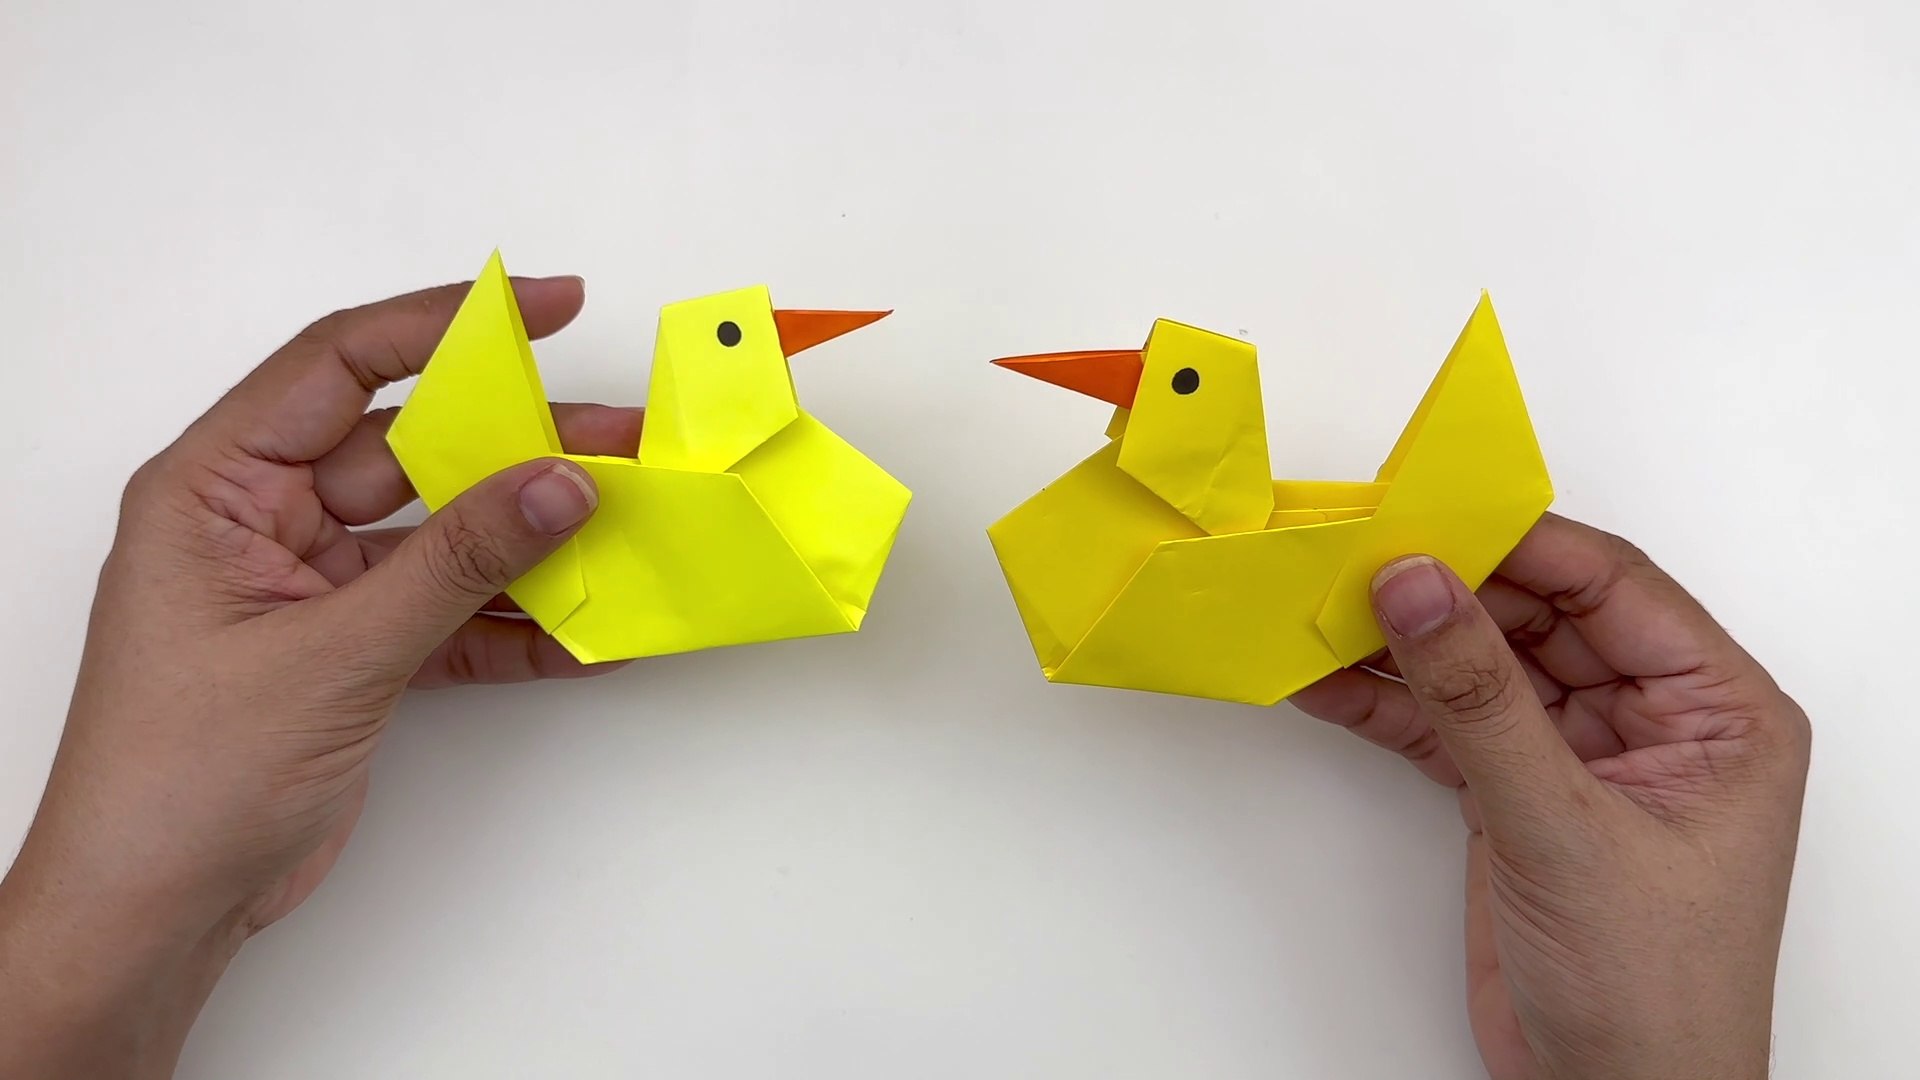 12 Paper duck ideas  duck, paper animals, paper